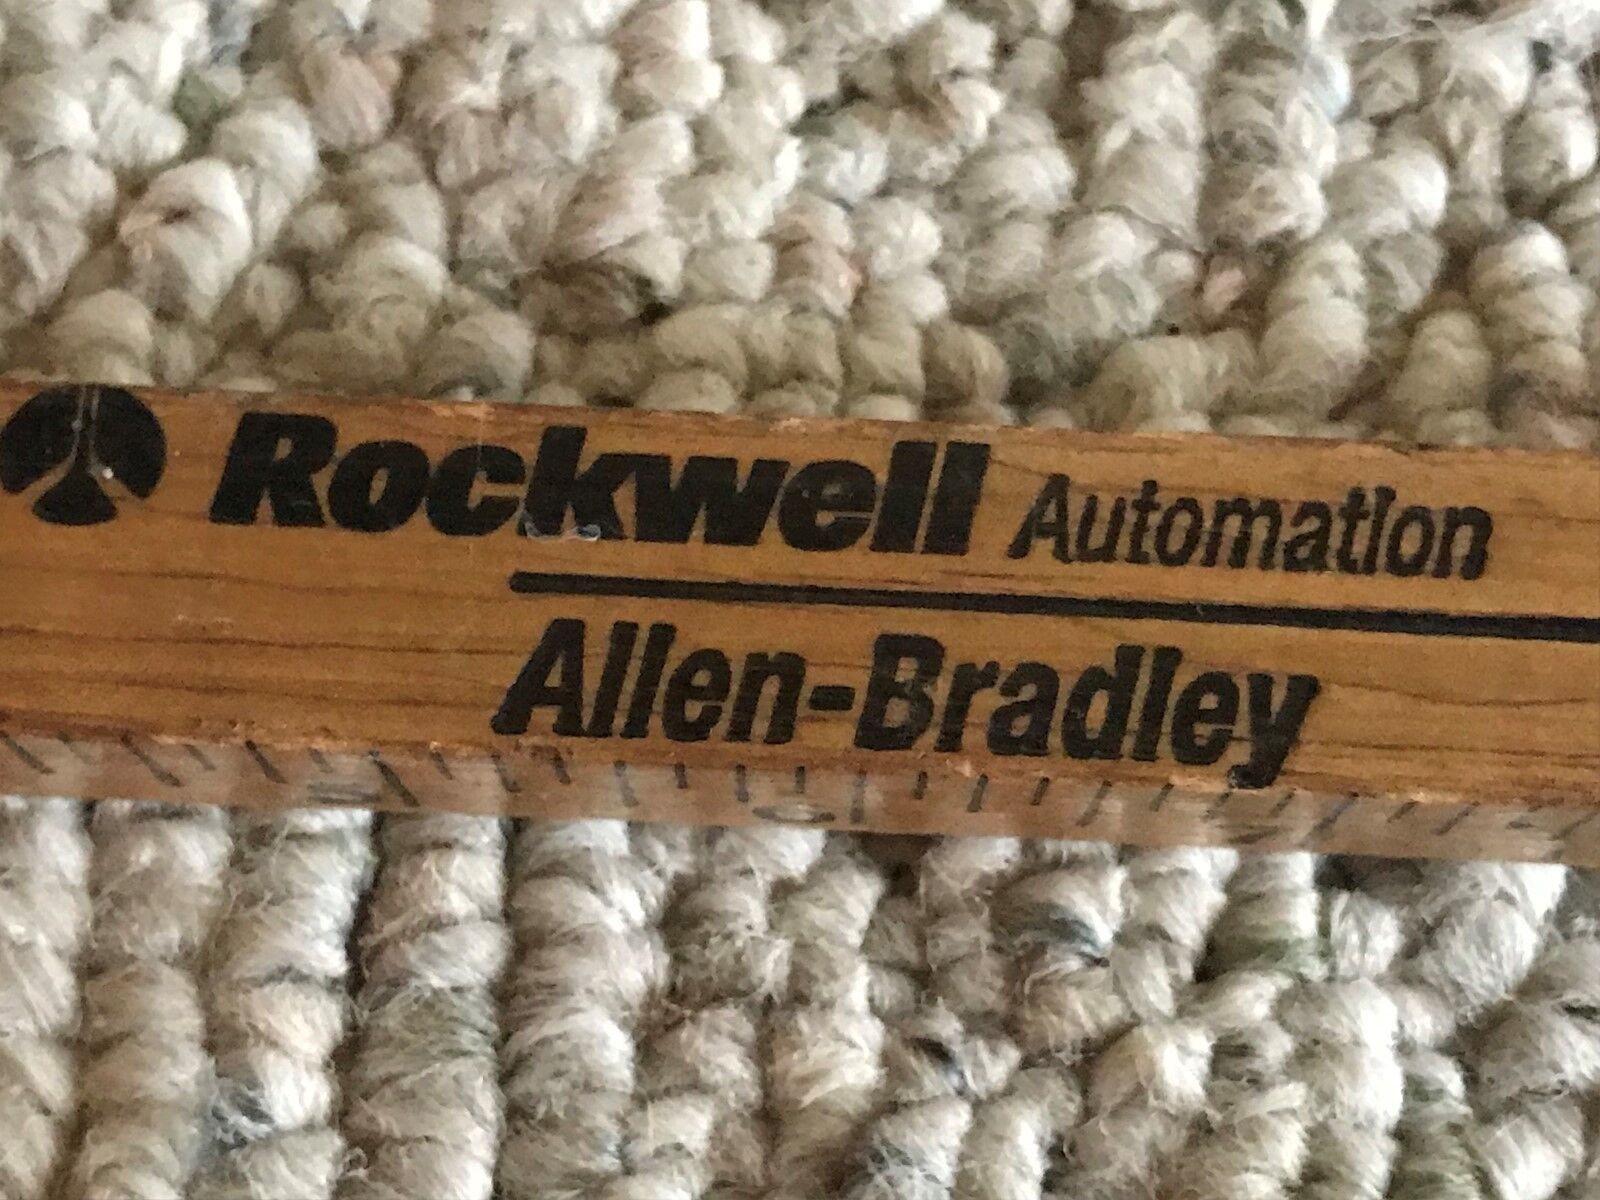 Allen Bradley Square Walking Stick Yardstick Rockwell Automation Advertising